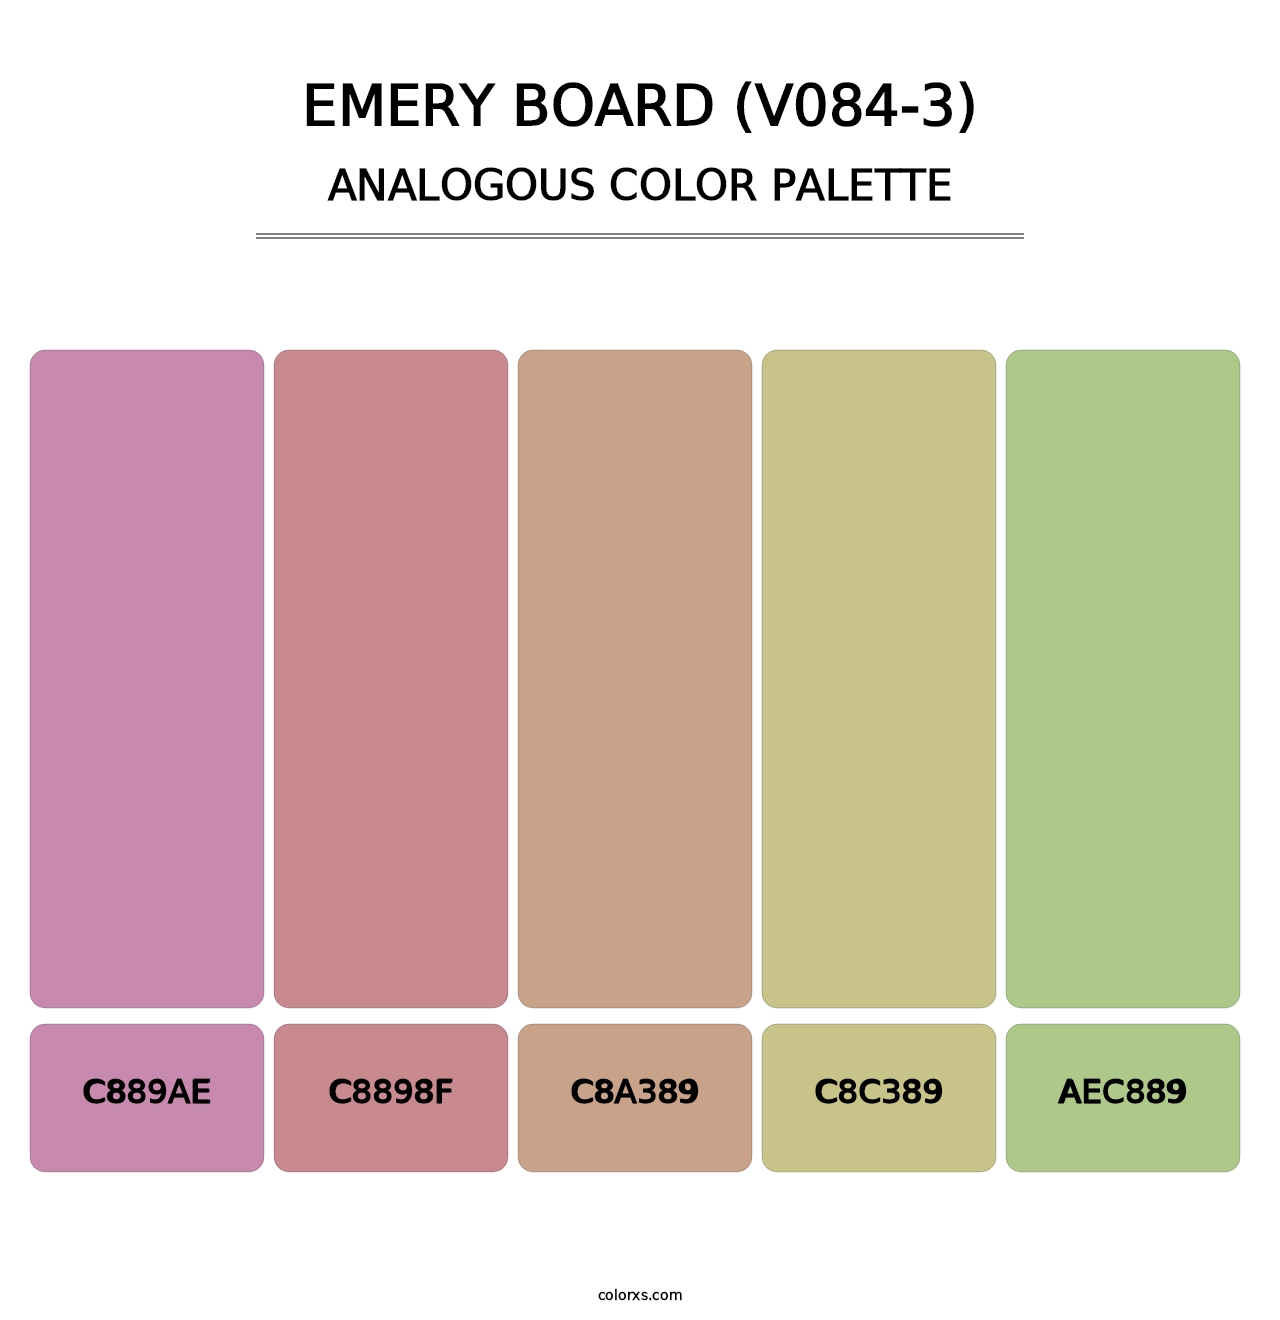 Emery Board (V084-3) - Analogous Color Palette